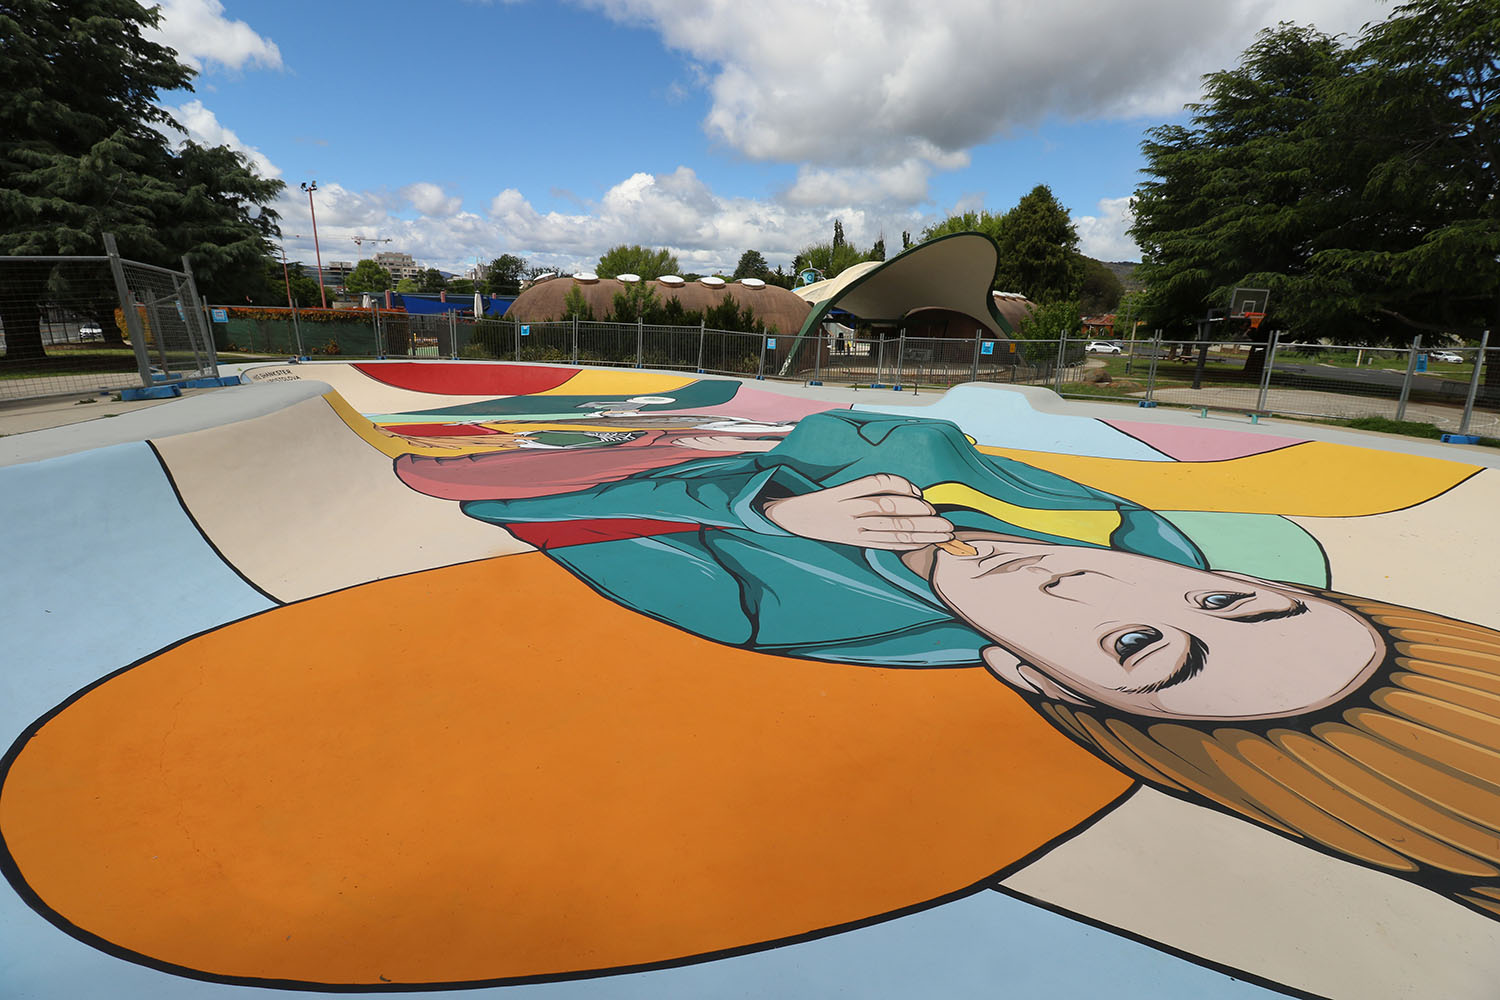 Queanbeyan Skate Park Mural - Mike Shankster - Mural